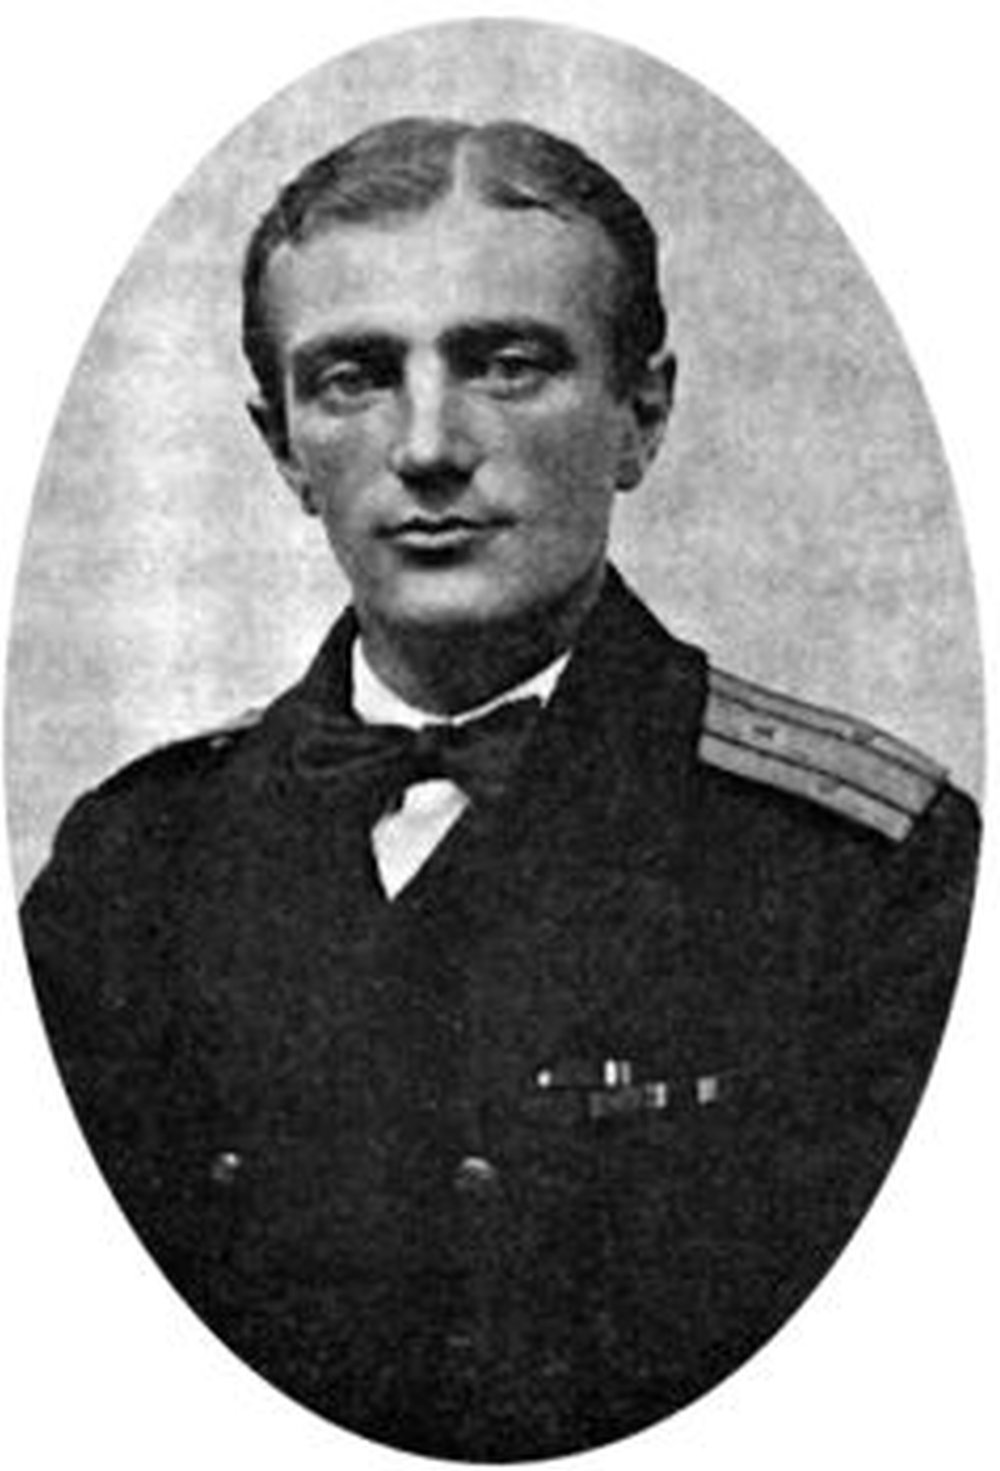 Капитан 2 ранга А.П. Ваксмут. 1924 год.